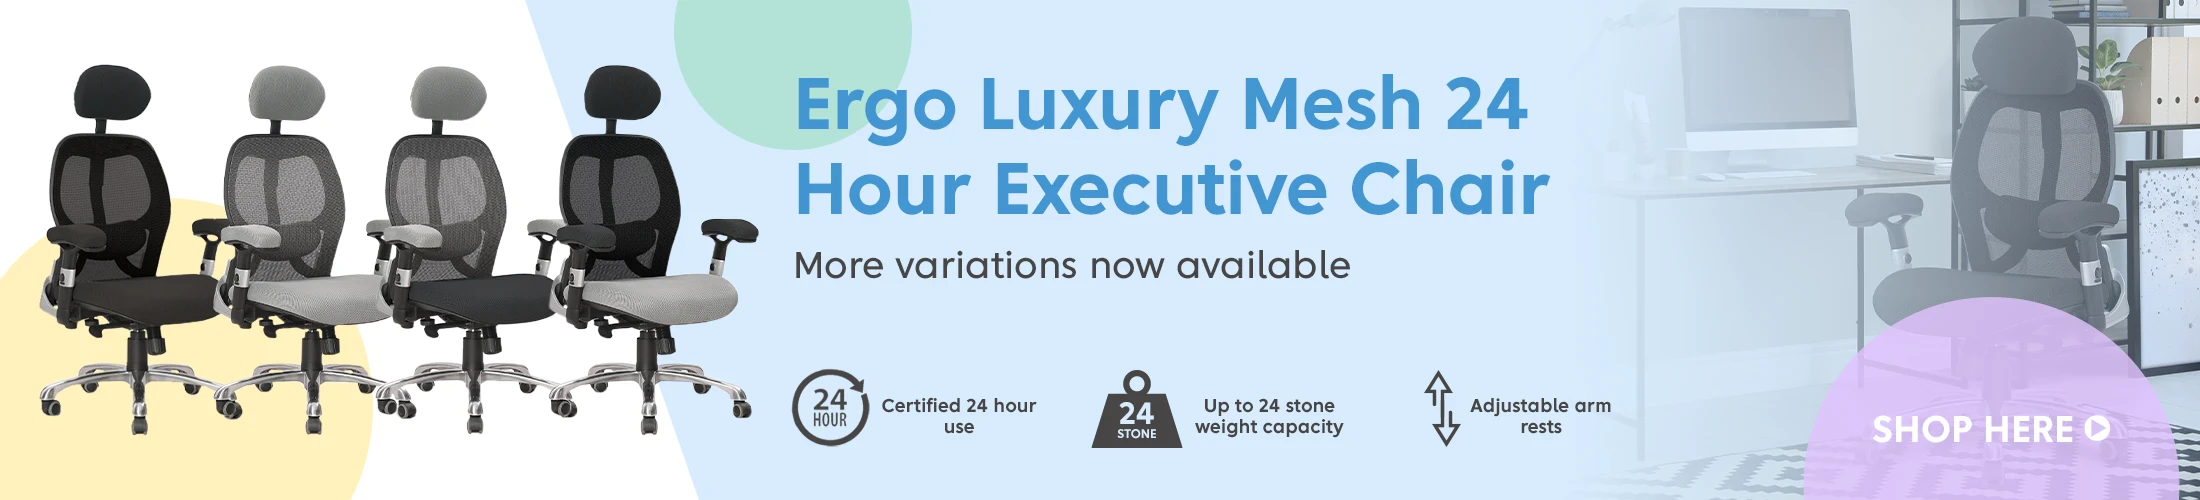 Ergo Luxury Mesh 24 Hour Executive Chair